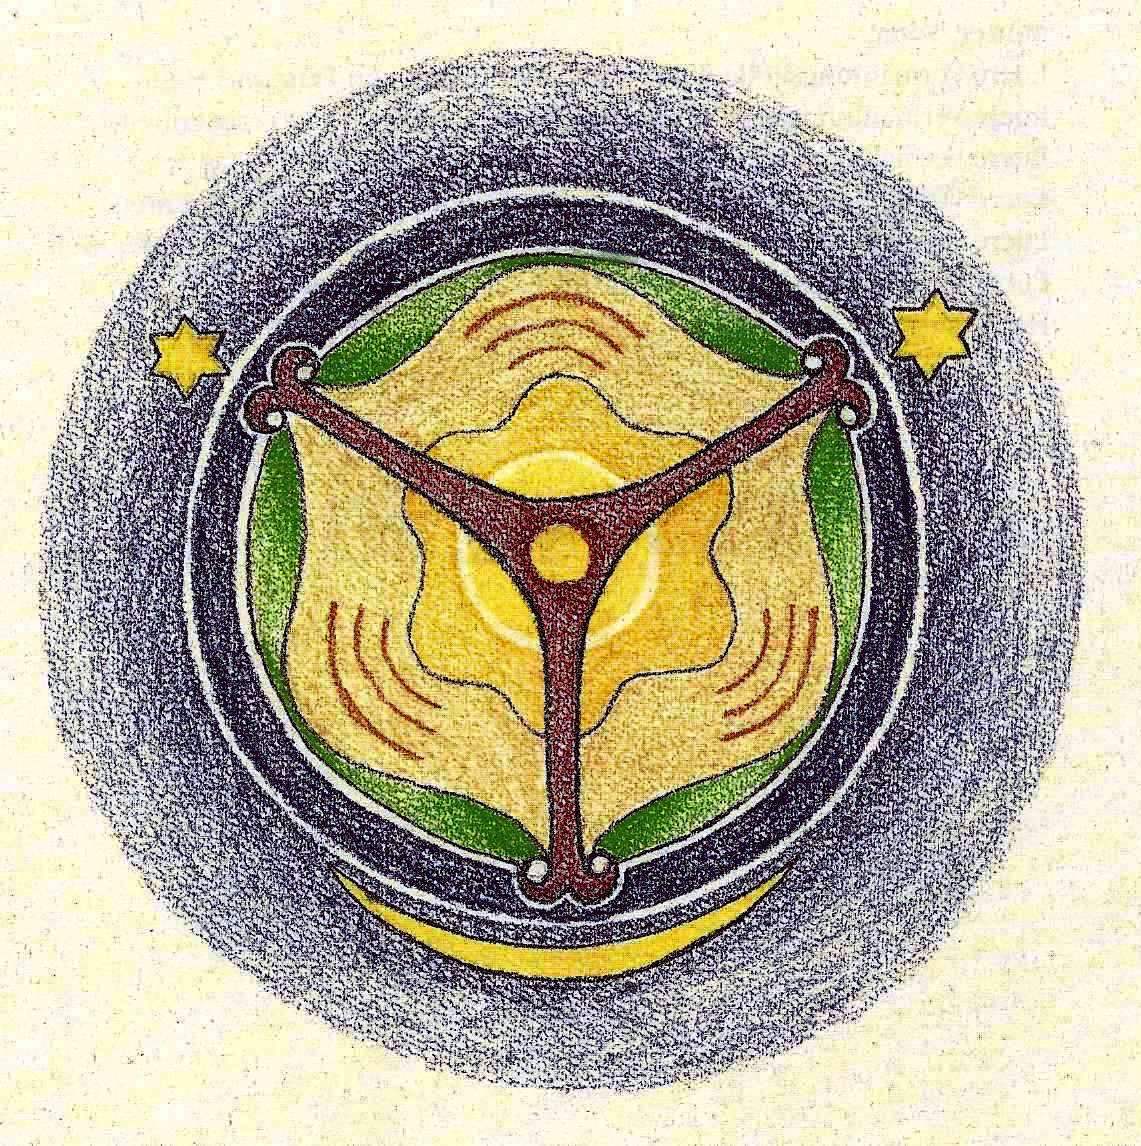 Mandala - Sophia, das weibliche Antlitz Gottes